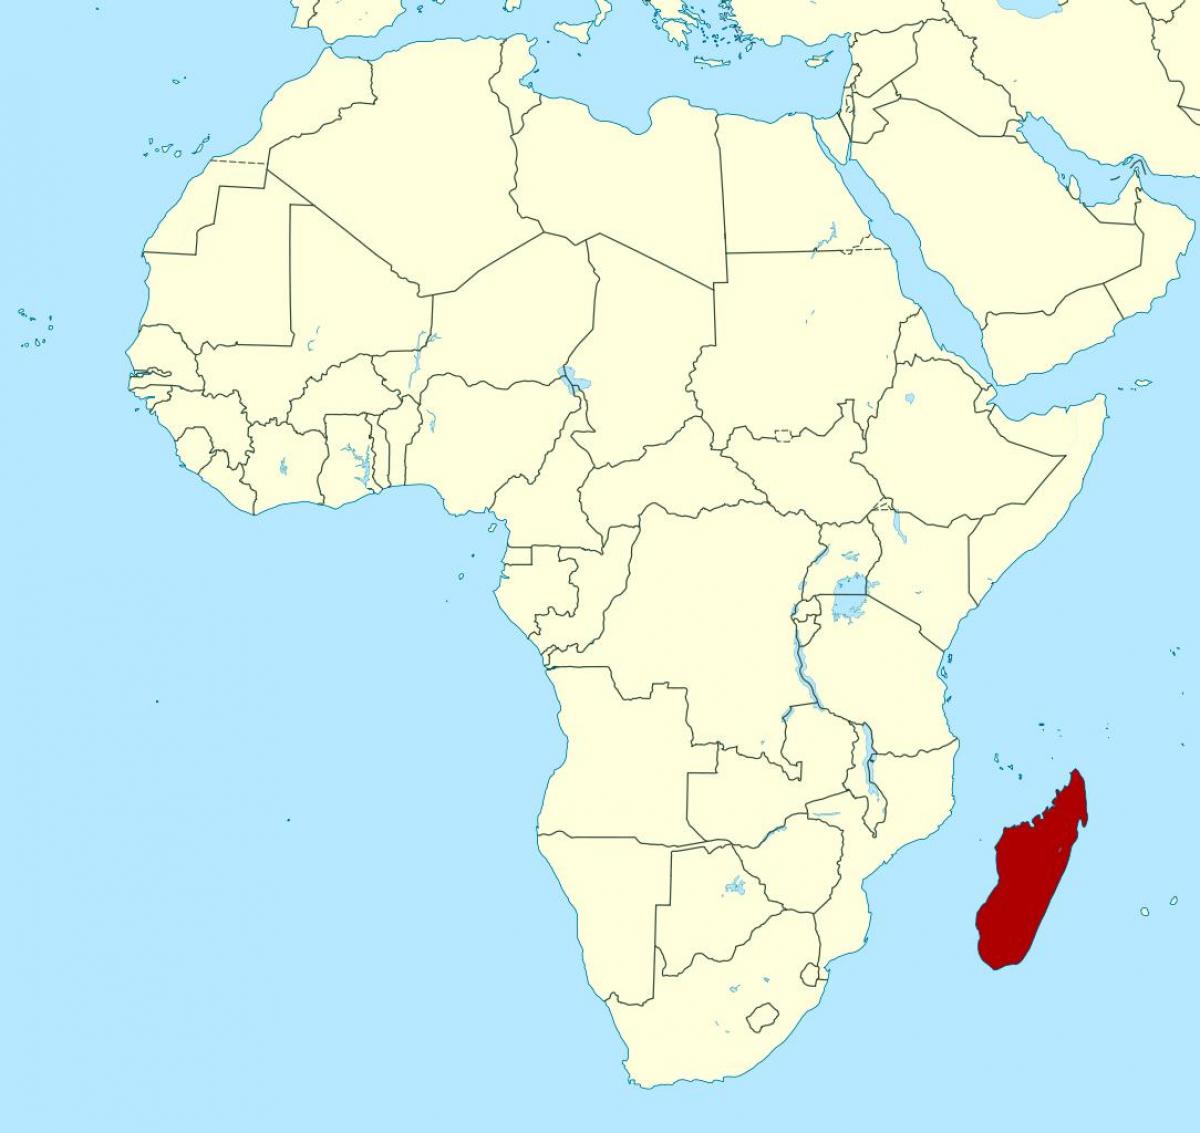 Madagaskar o afriki zemljevid